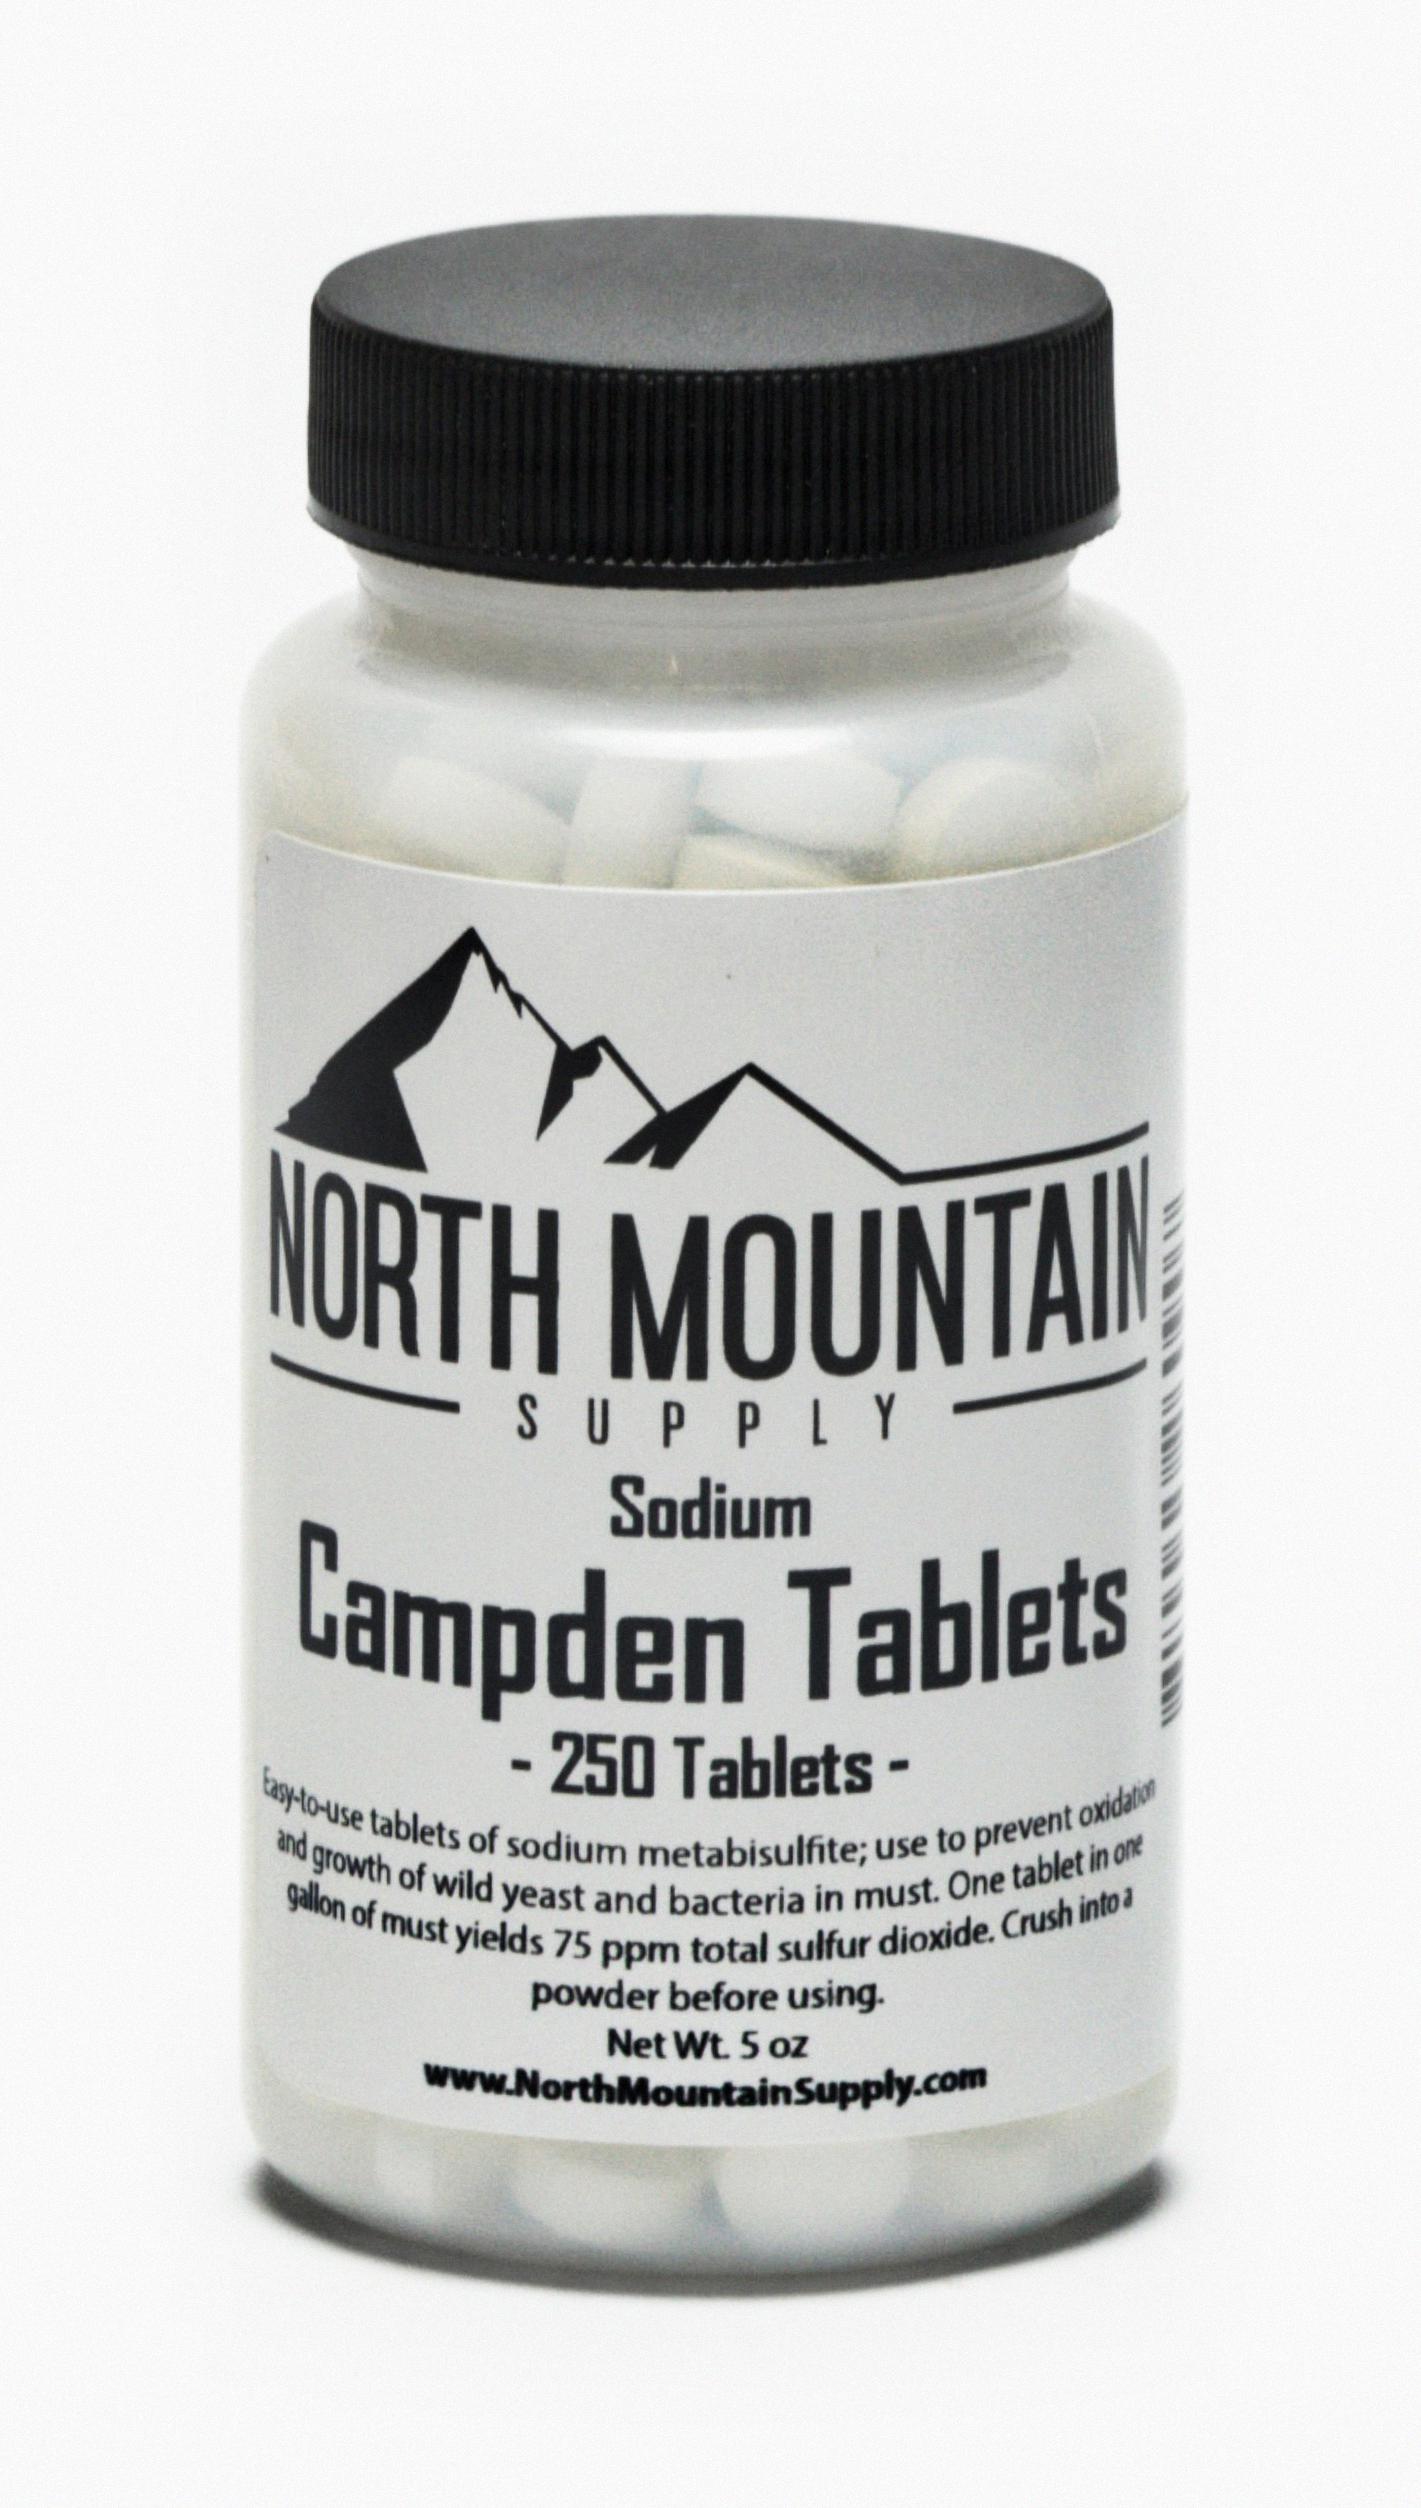 campden tablets